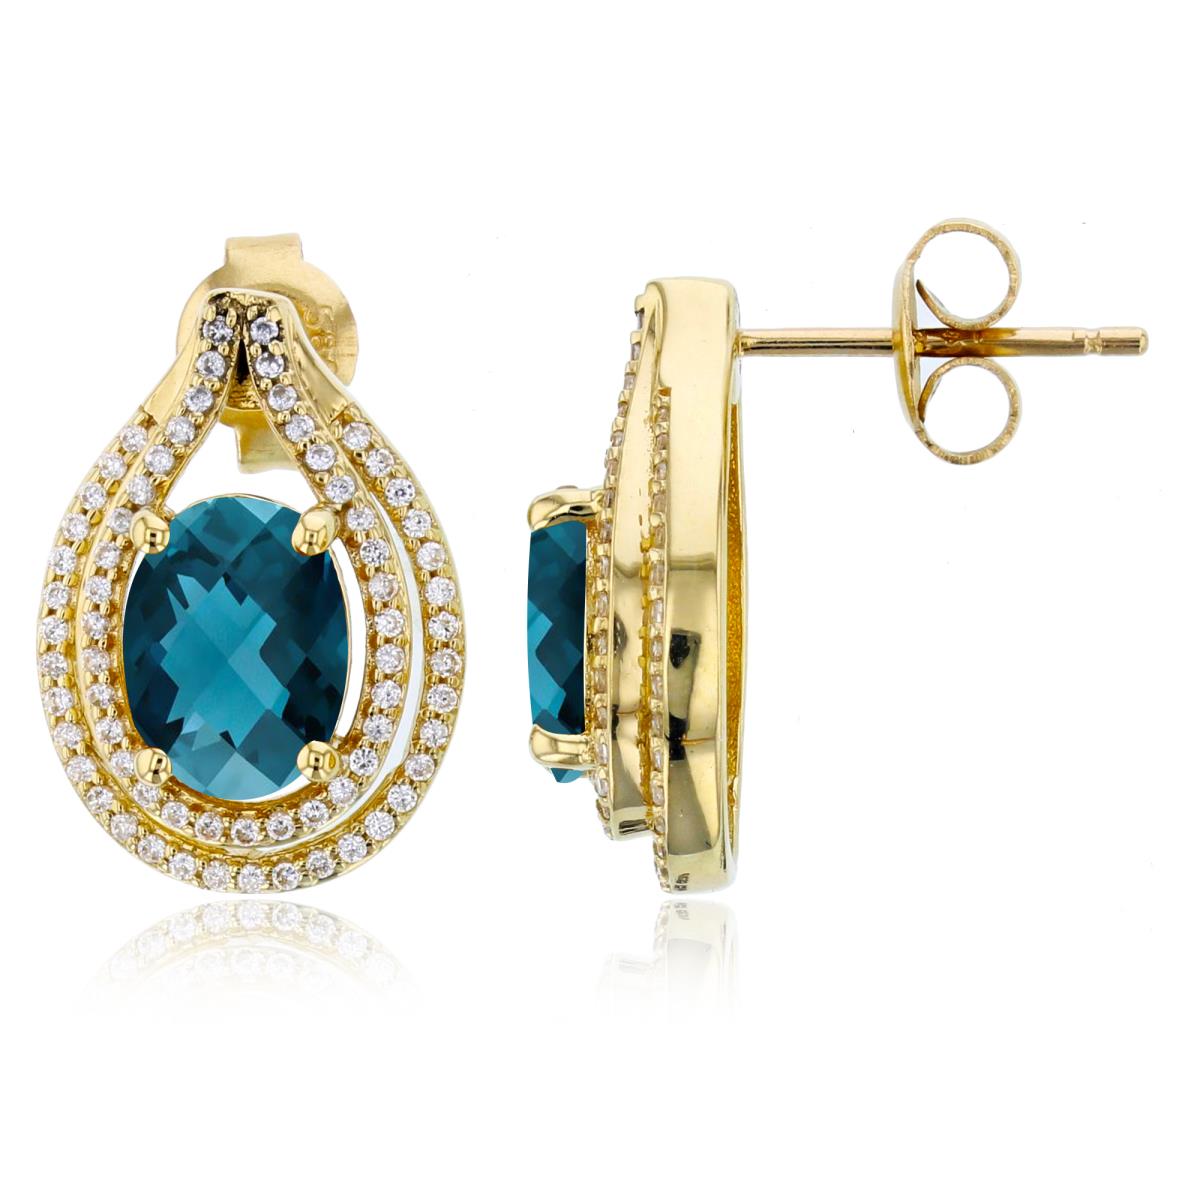 14K Yellow Gold 0.41cttw Rnd Diamonds & 8x6mm Ov London Blue Topaz Double Halo Earrings